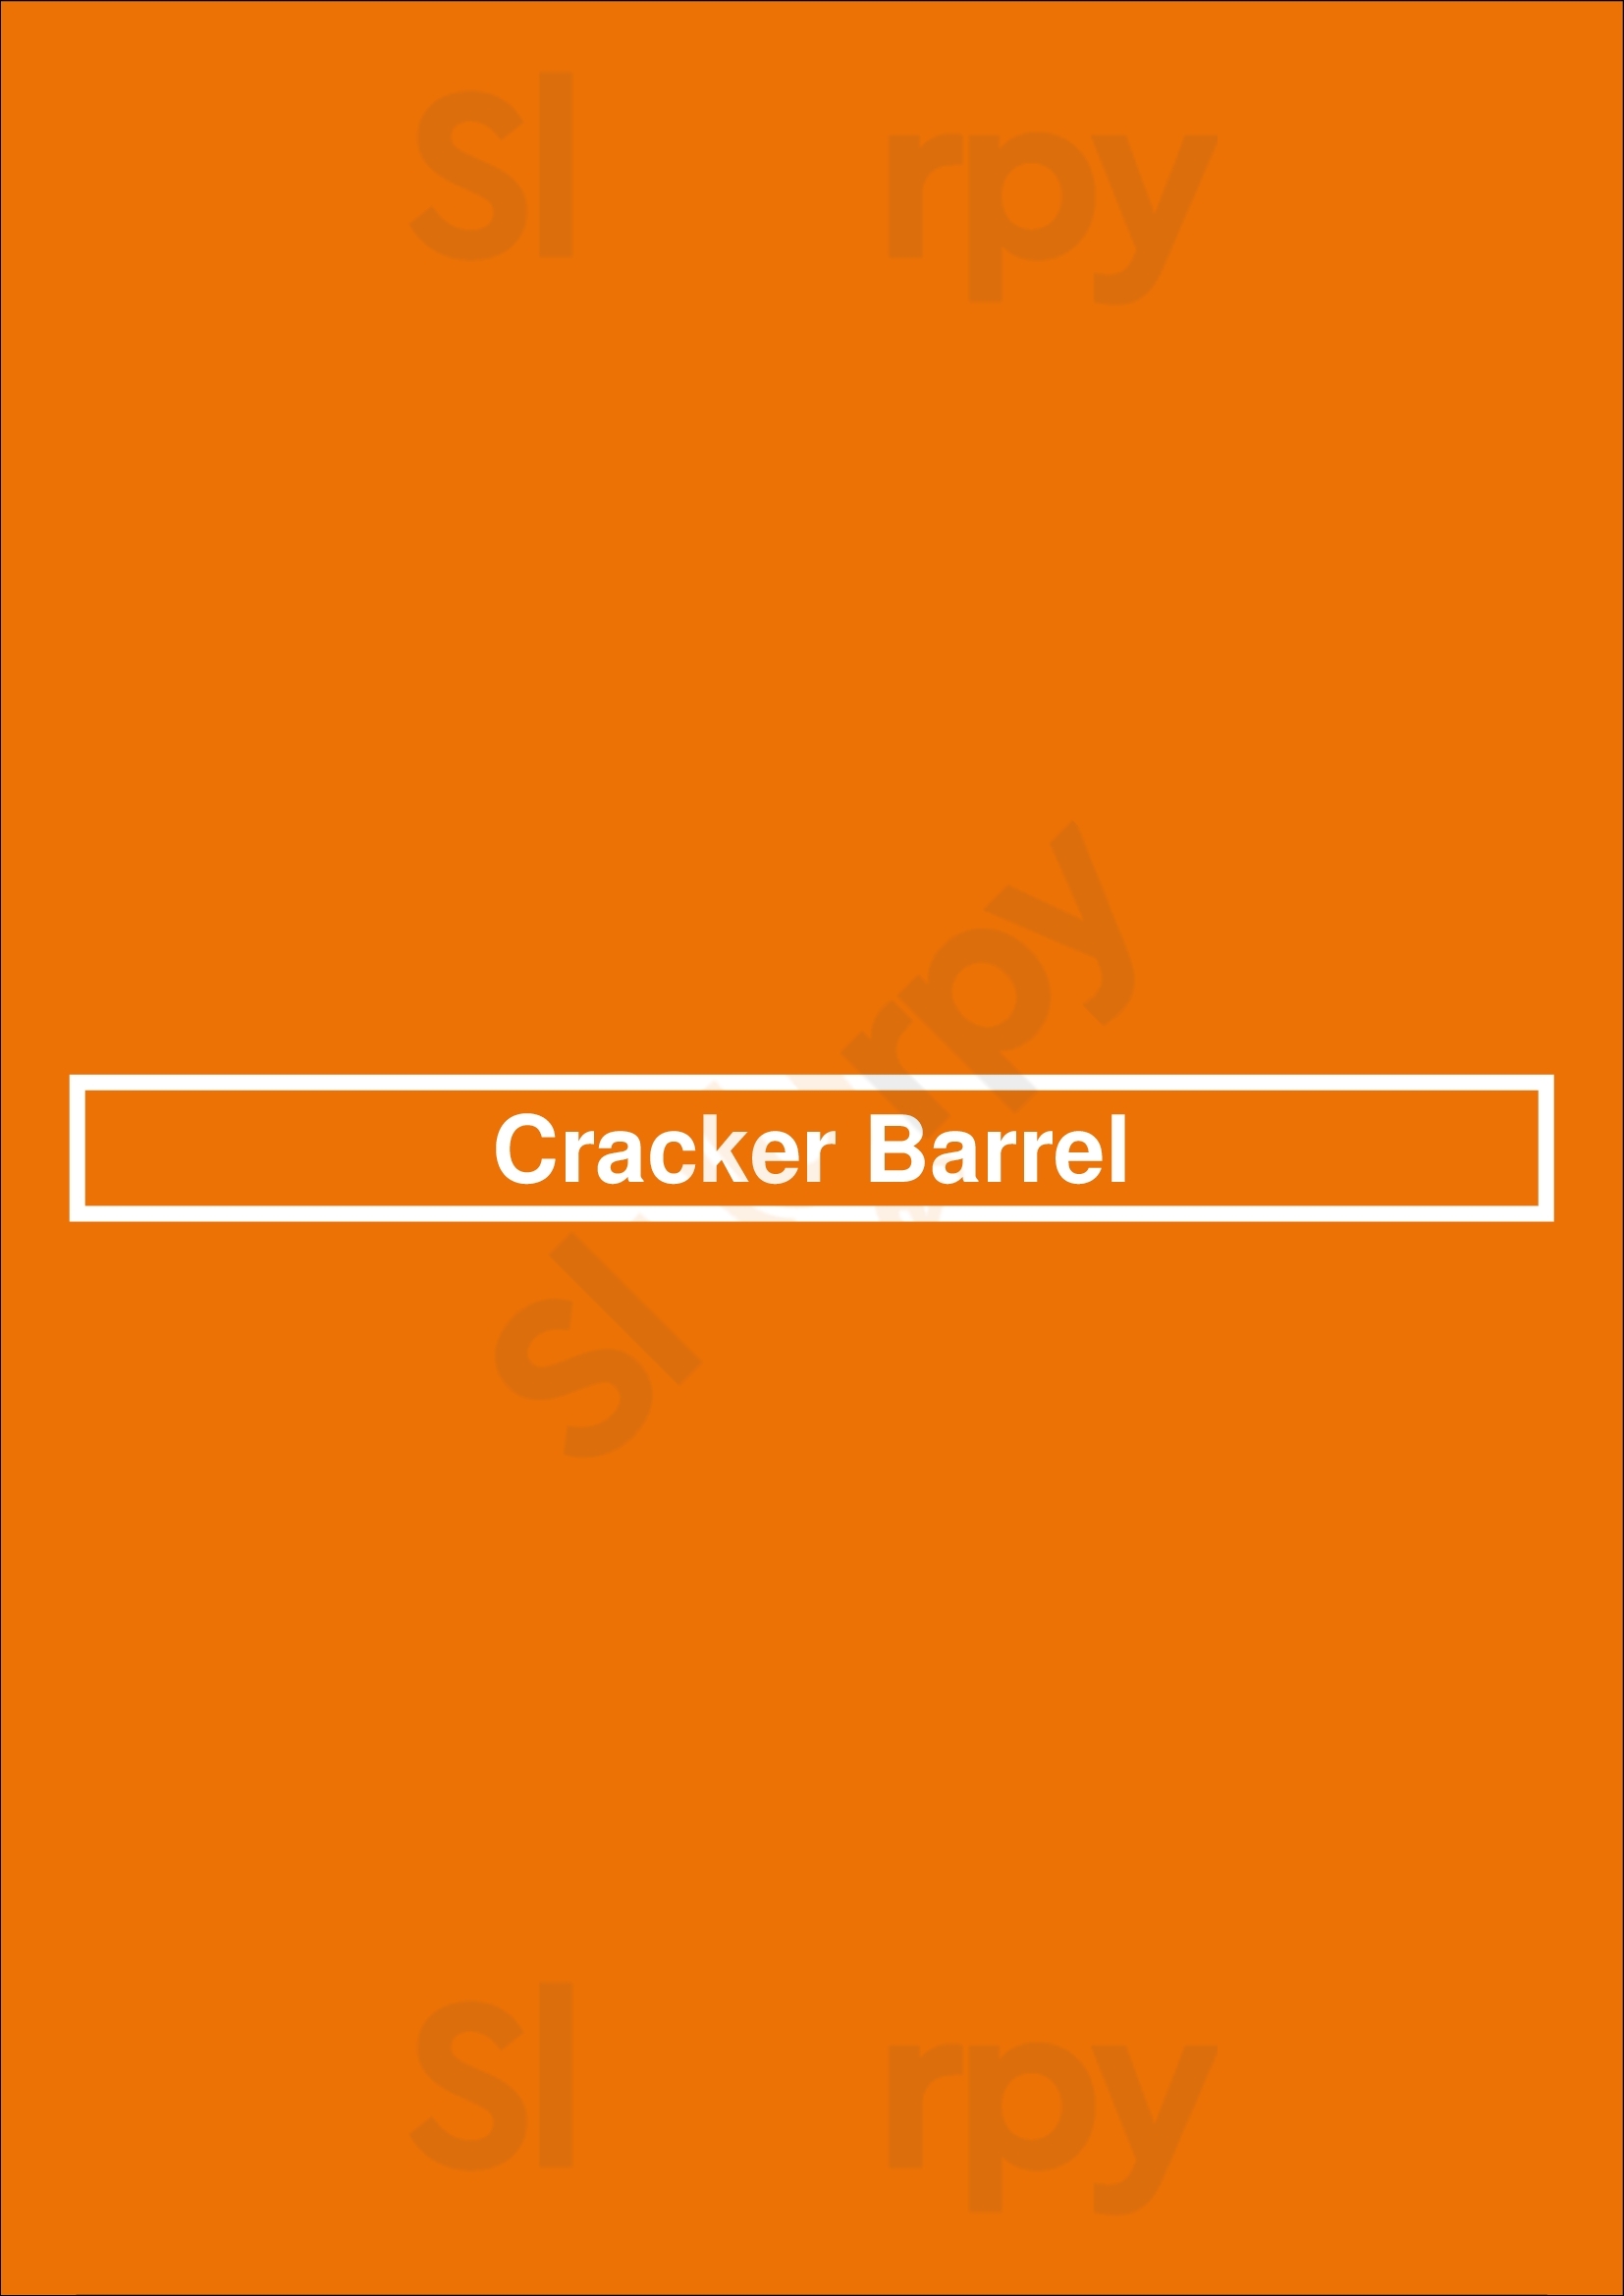 Cracker Barrel Knoxville Menu - 1